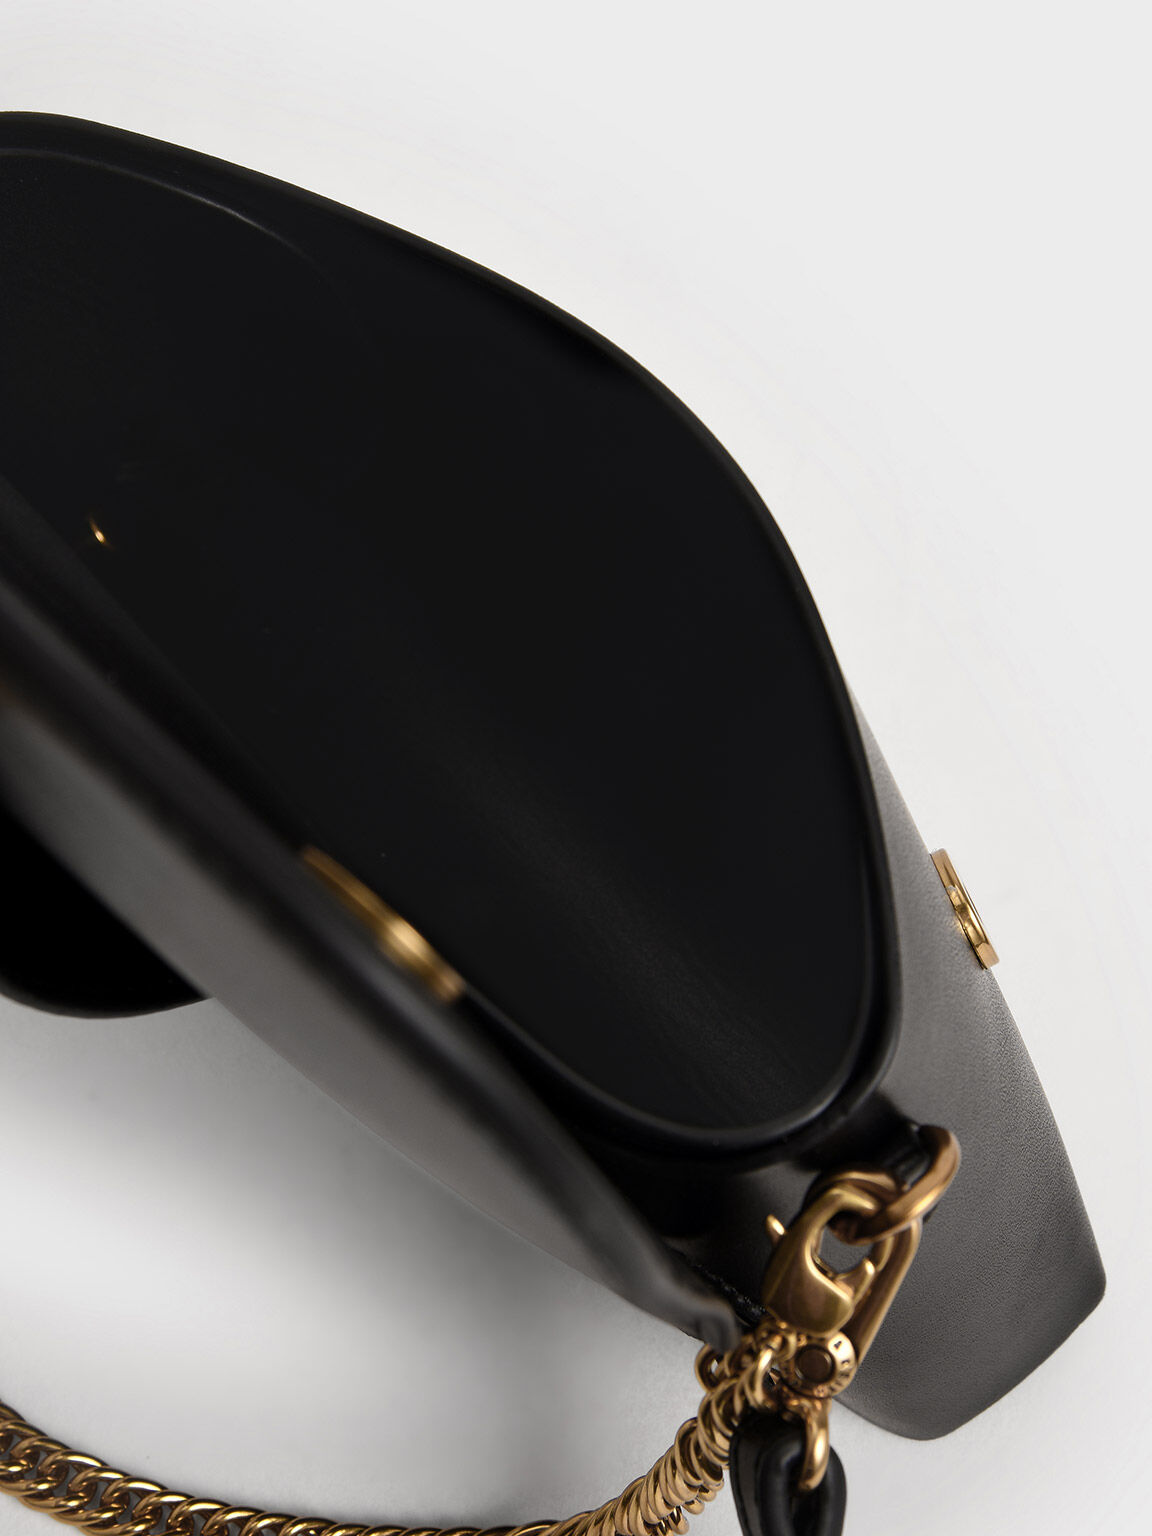 Best Gold-Chain Bags | POPSUGAR Fashion